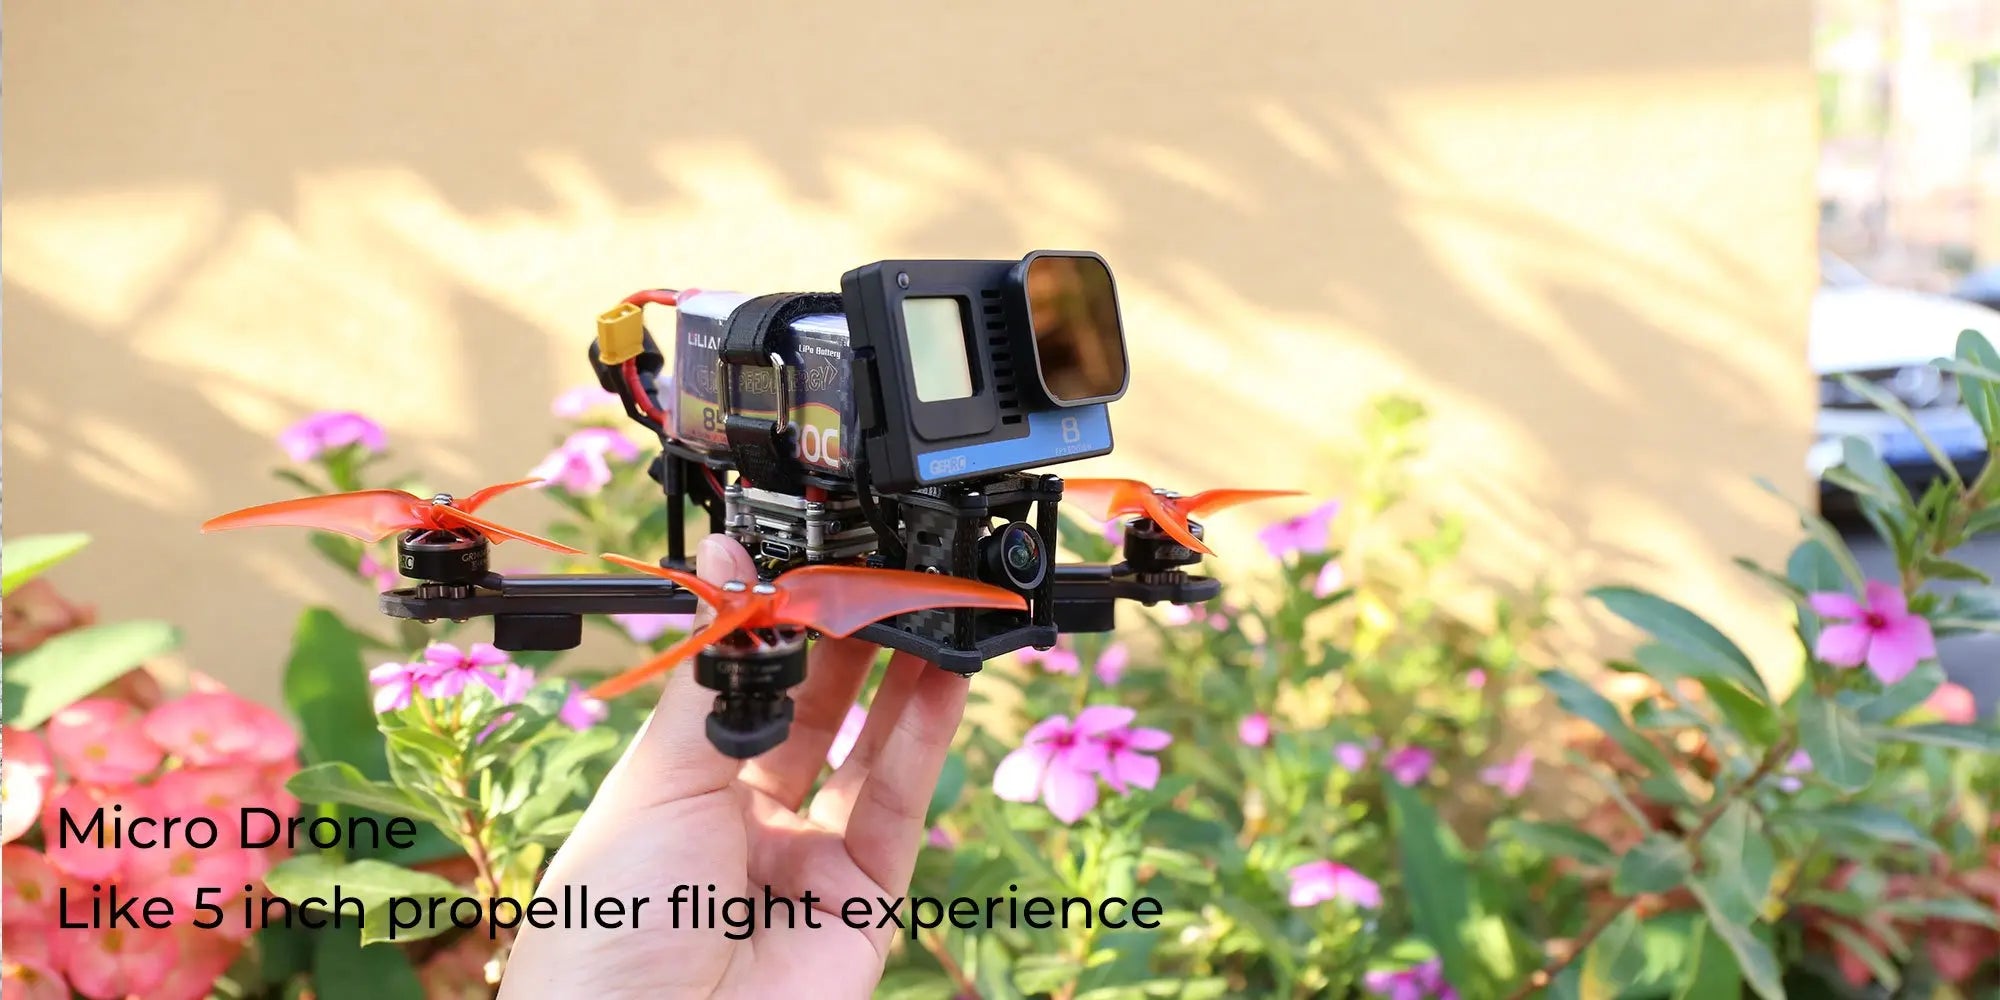 GEPRC SMART 35 FPV Drone, Pov> Oc Micro Drone Like 5 inch propeller flight experience LiLIn 